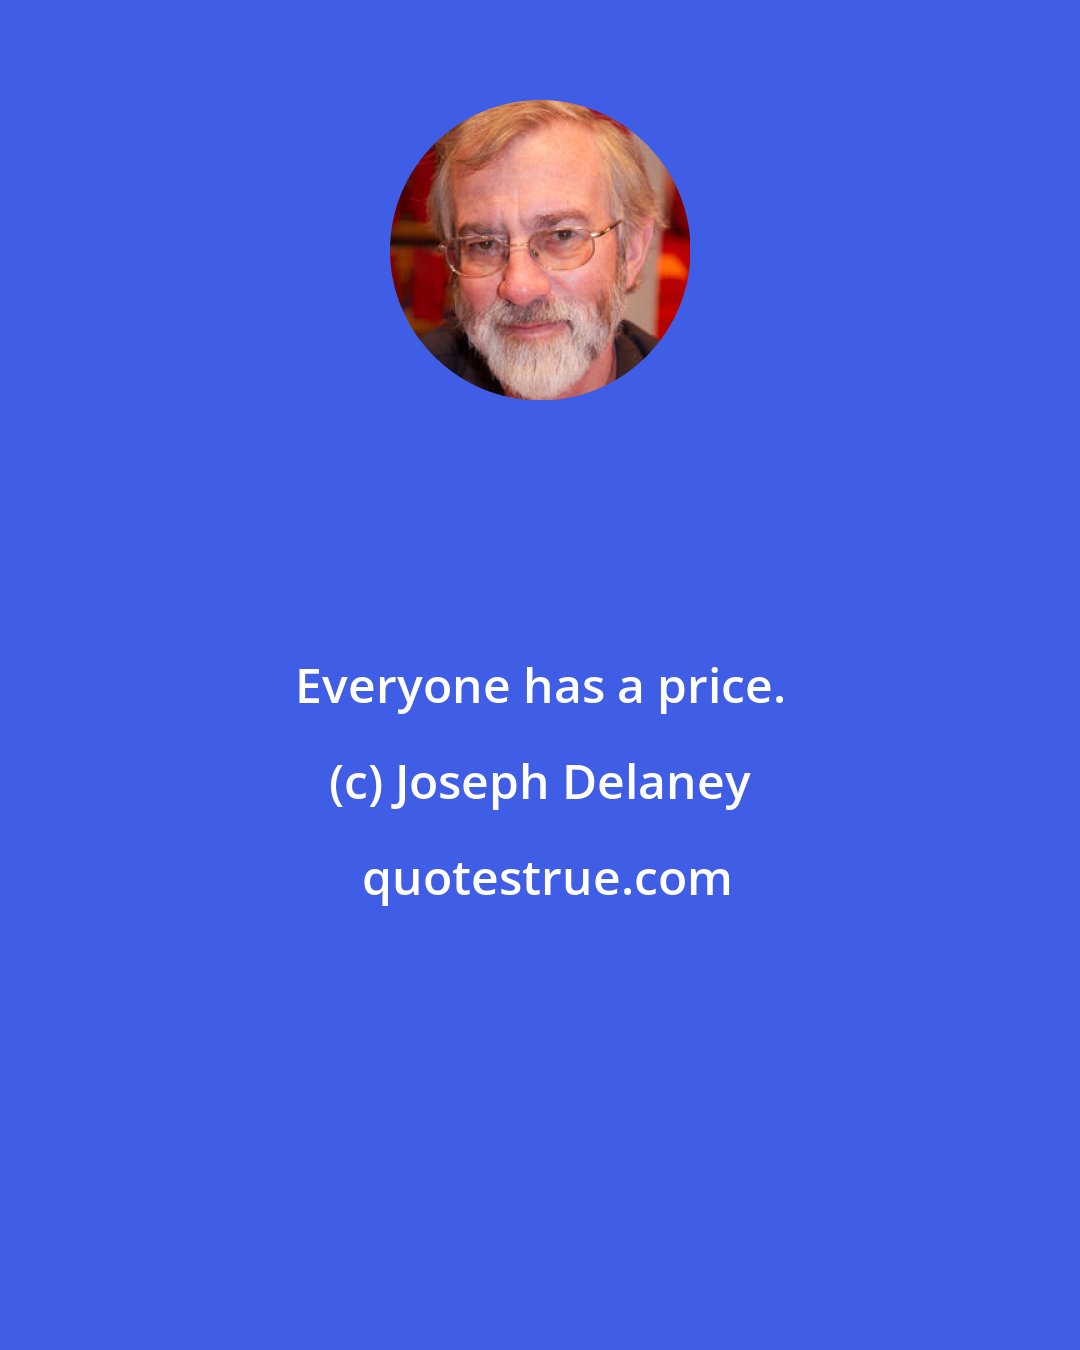 Joseph Delaney: Everyone has a price.